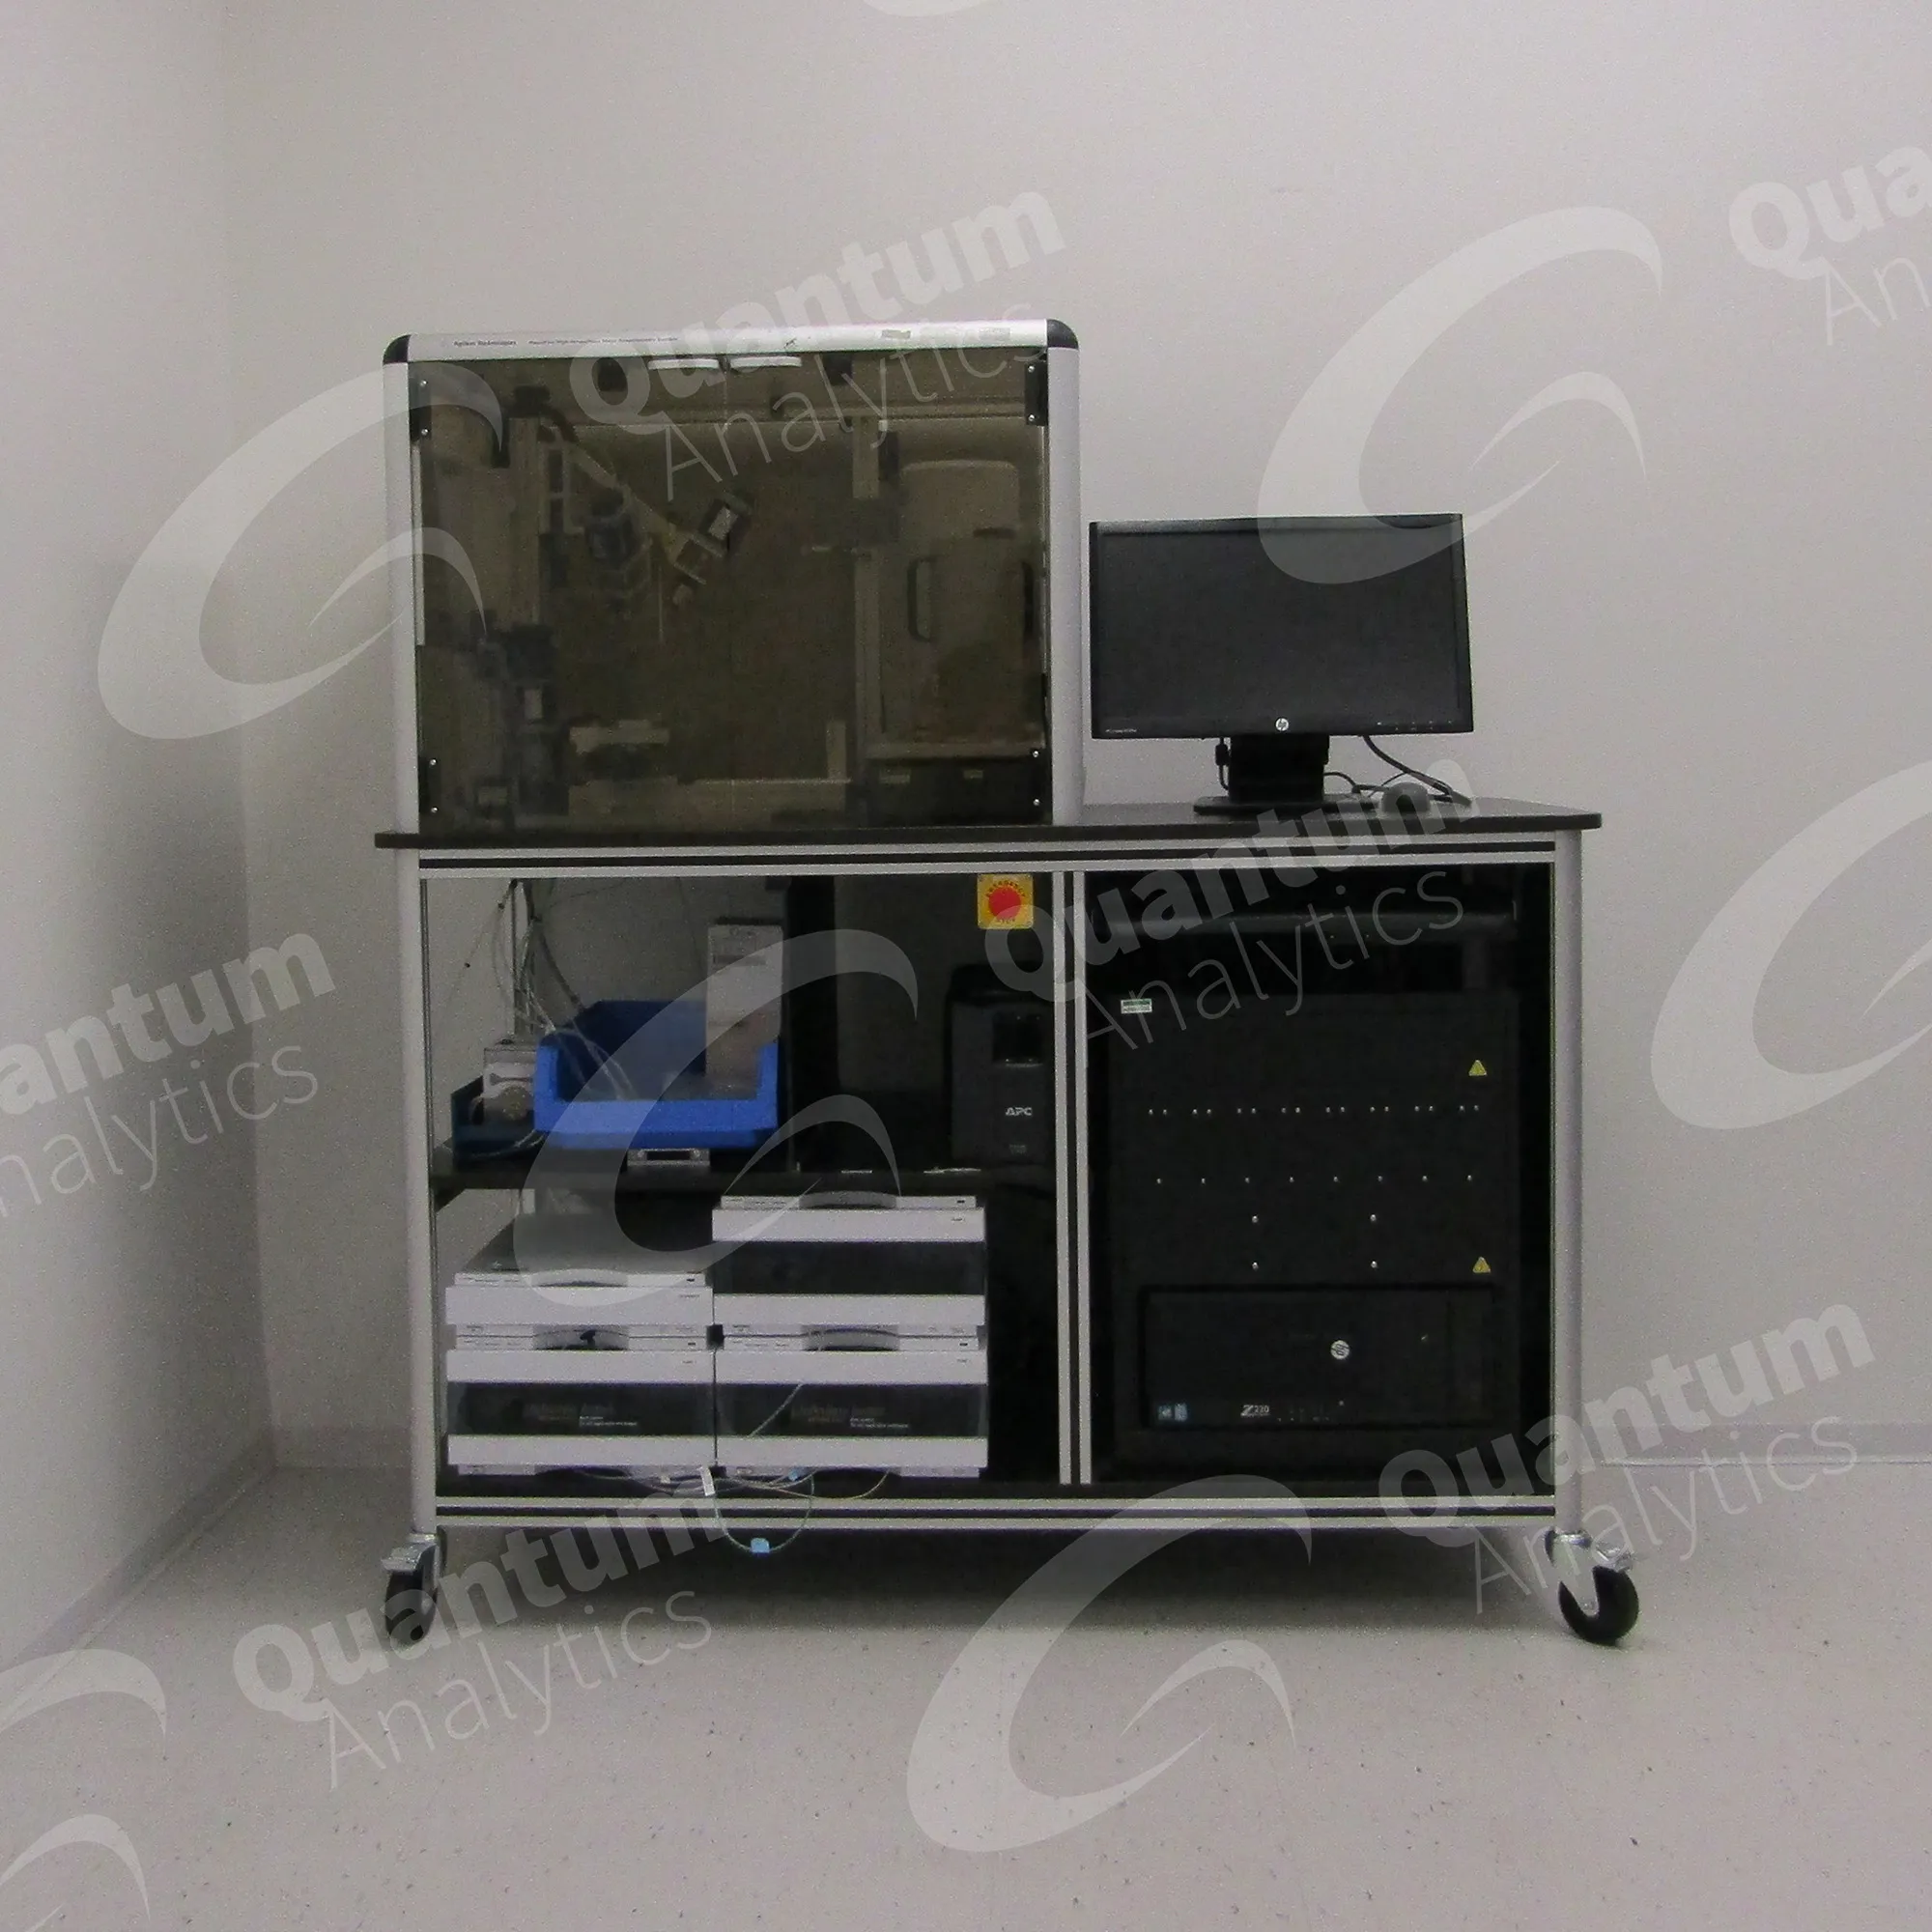 Agilent G9213AA RapidFire 300 High-Throughput Mass Spectrometry System (G9213AA)